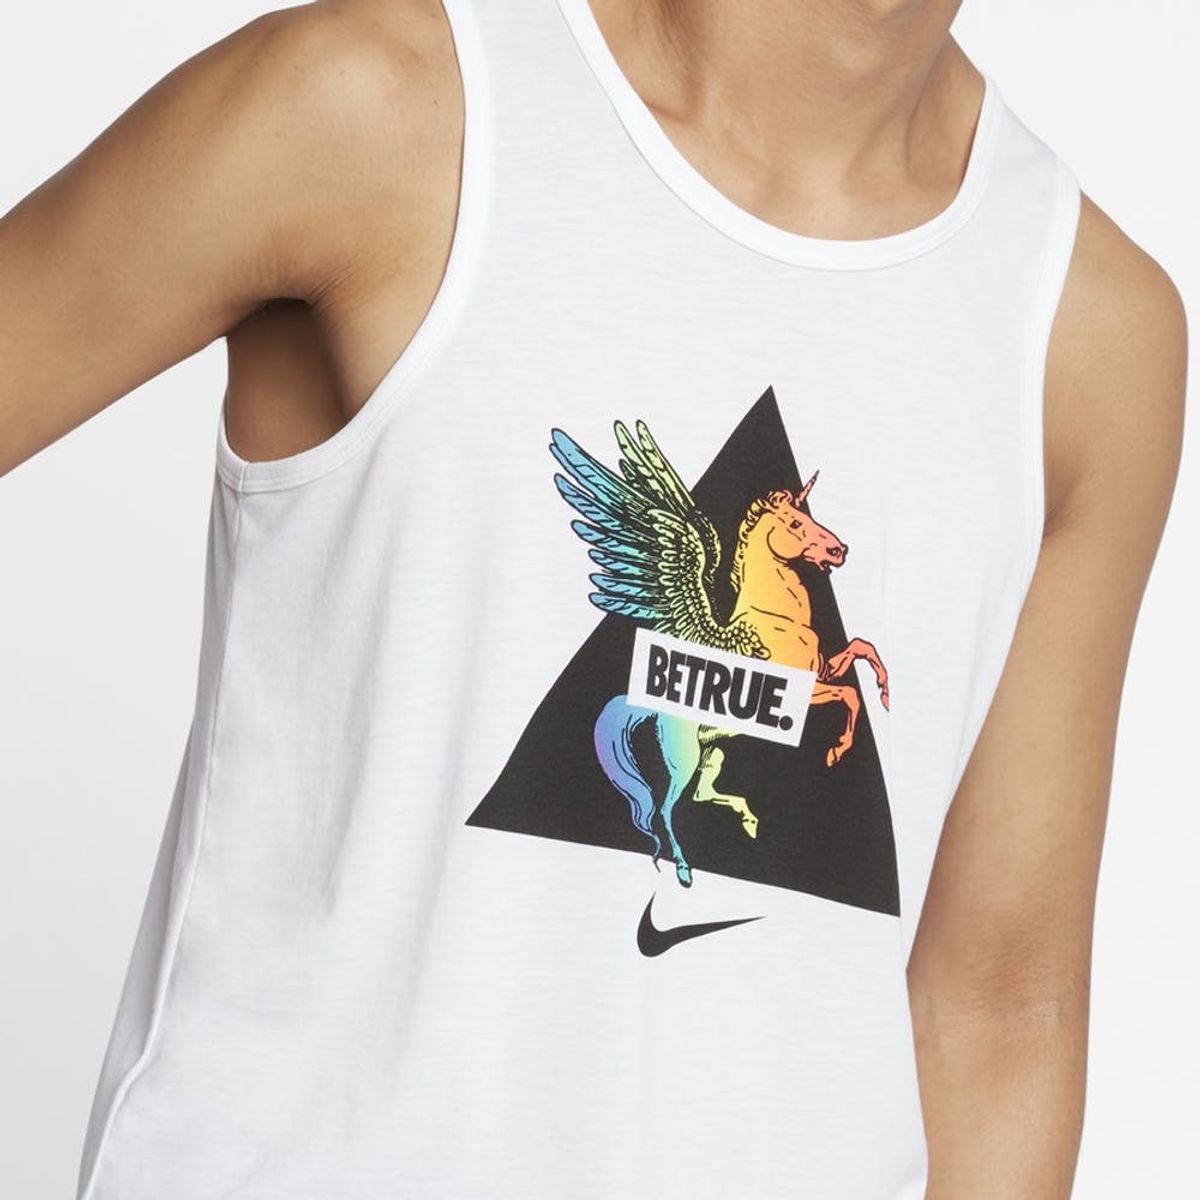 Nike’s Dreamy New Rainbow Kicks Give a Major Nod to the LGBTQ+ Community